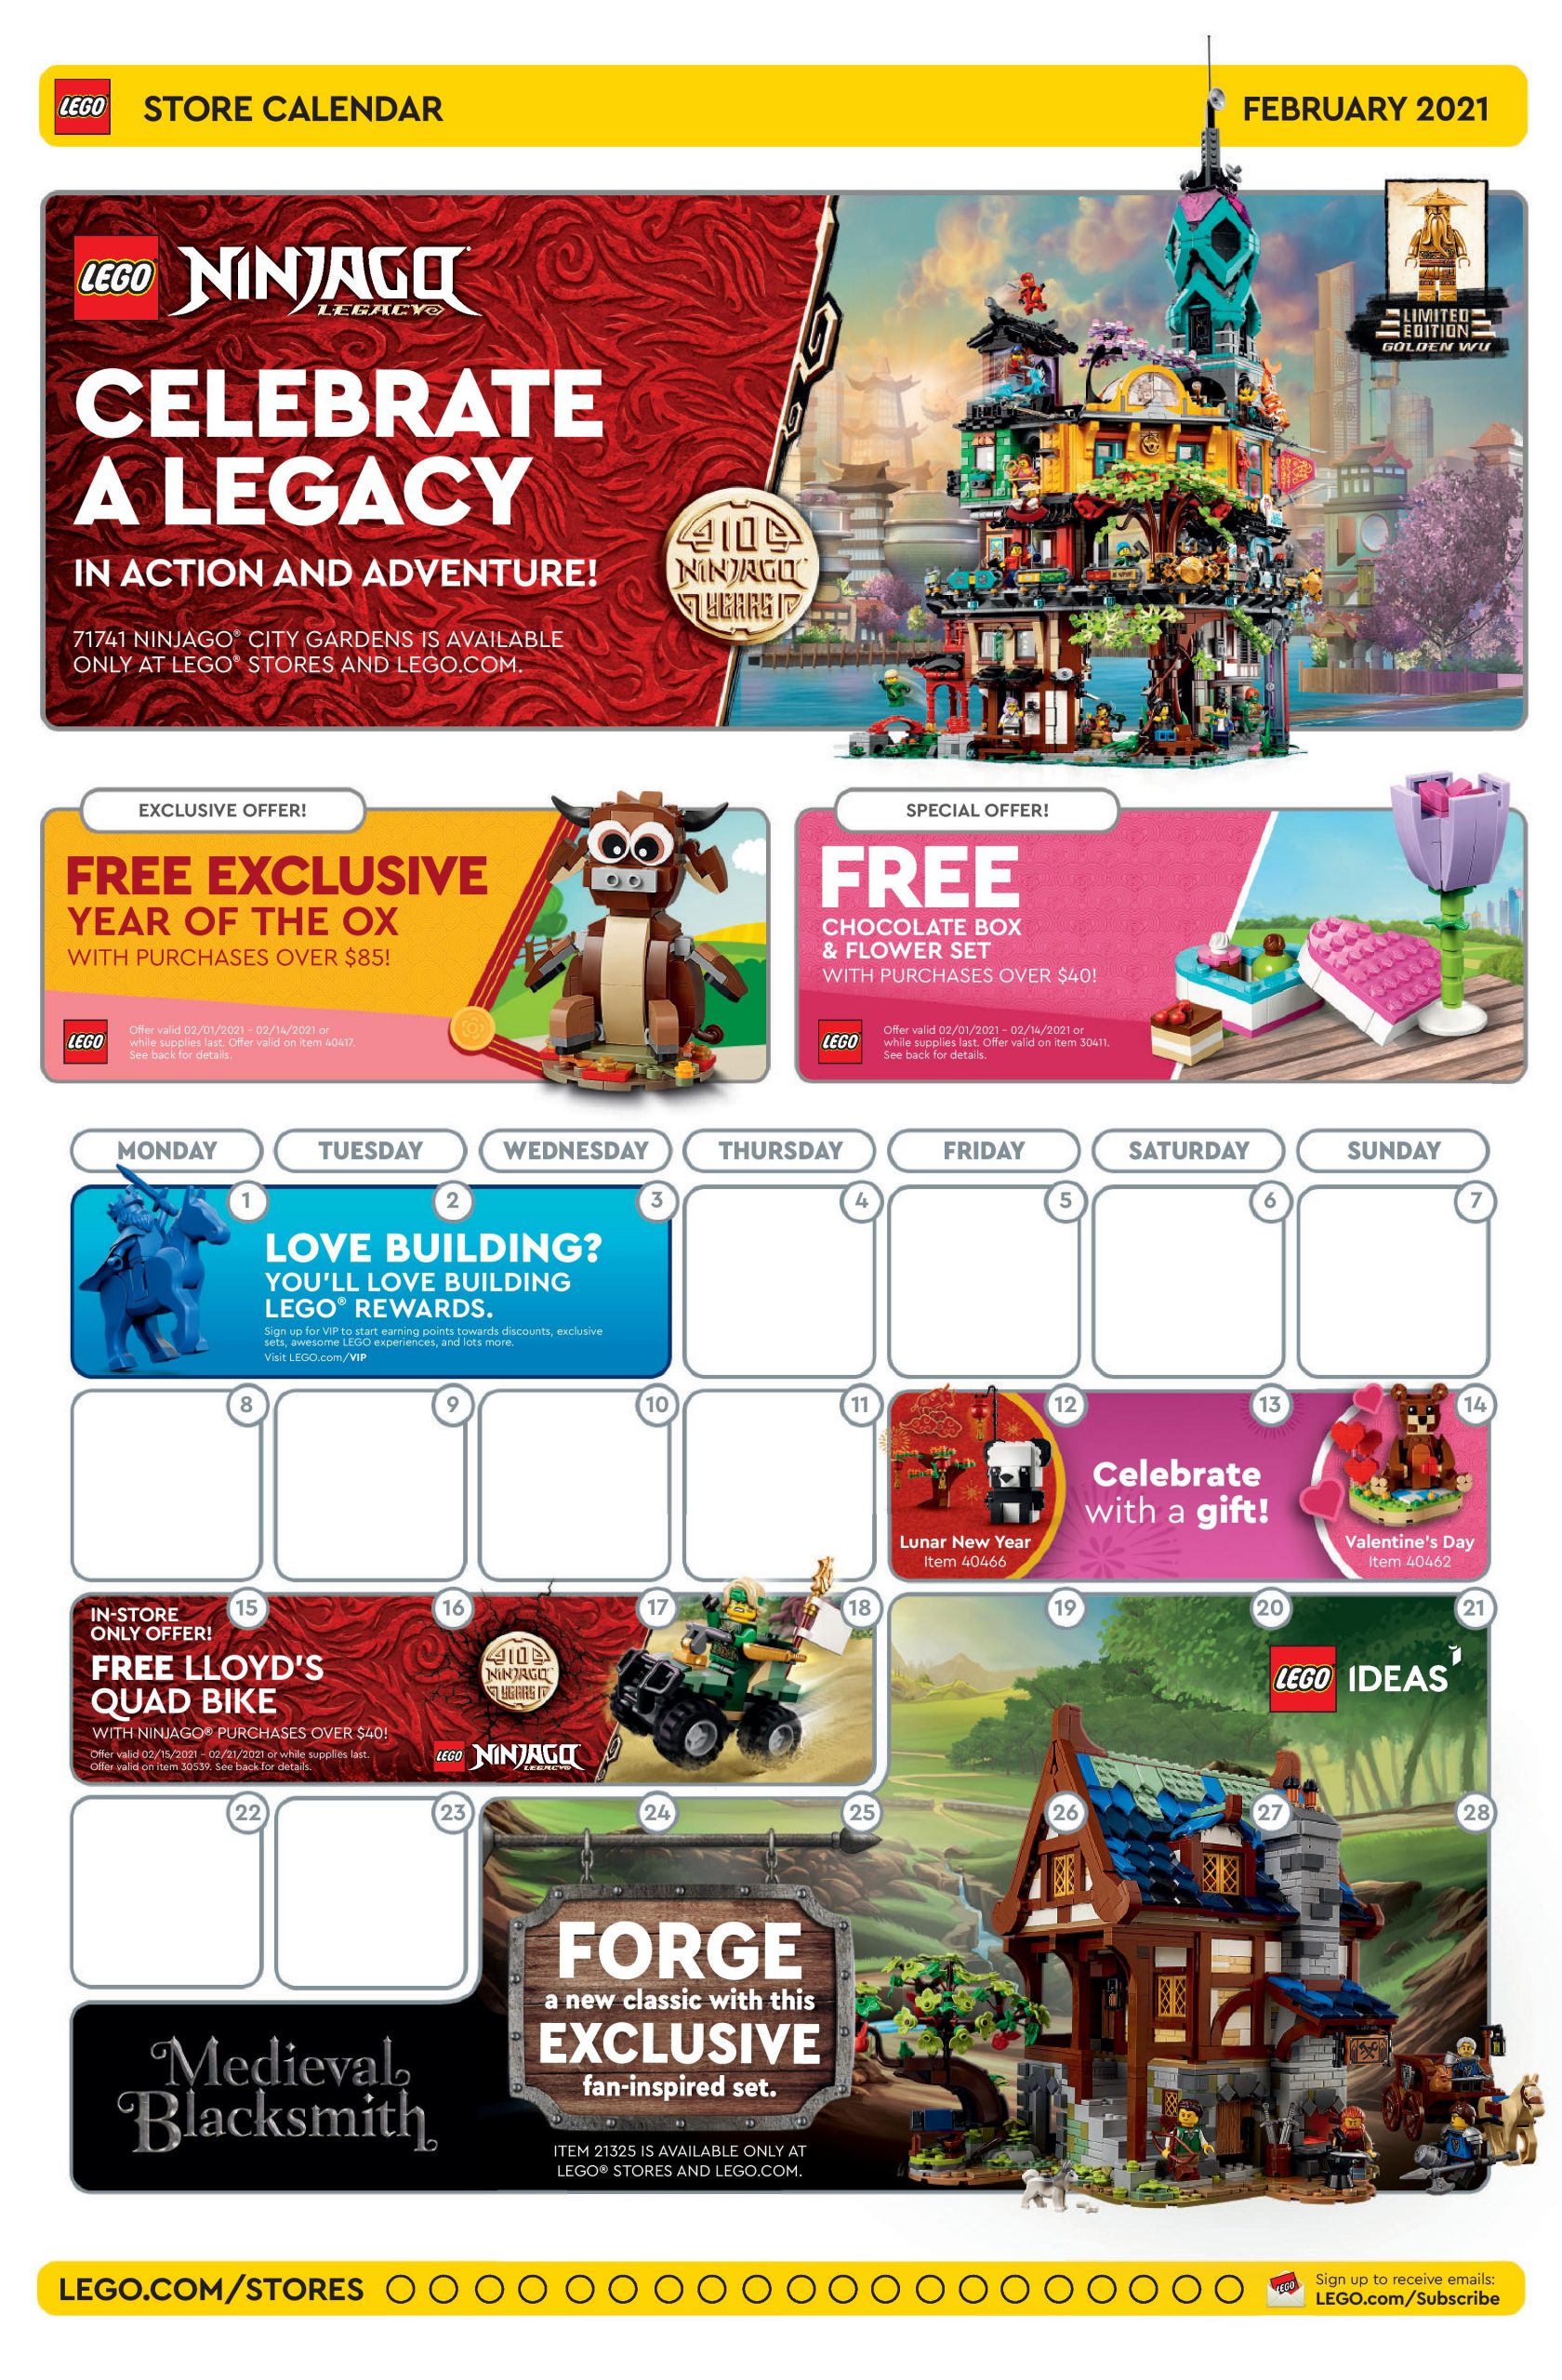 Lego Calendar April 2022 Lego February 2021 Store Calendar Promotions & Events - The Brick Fan